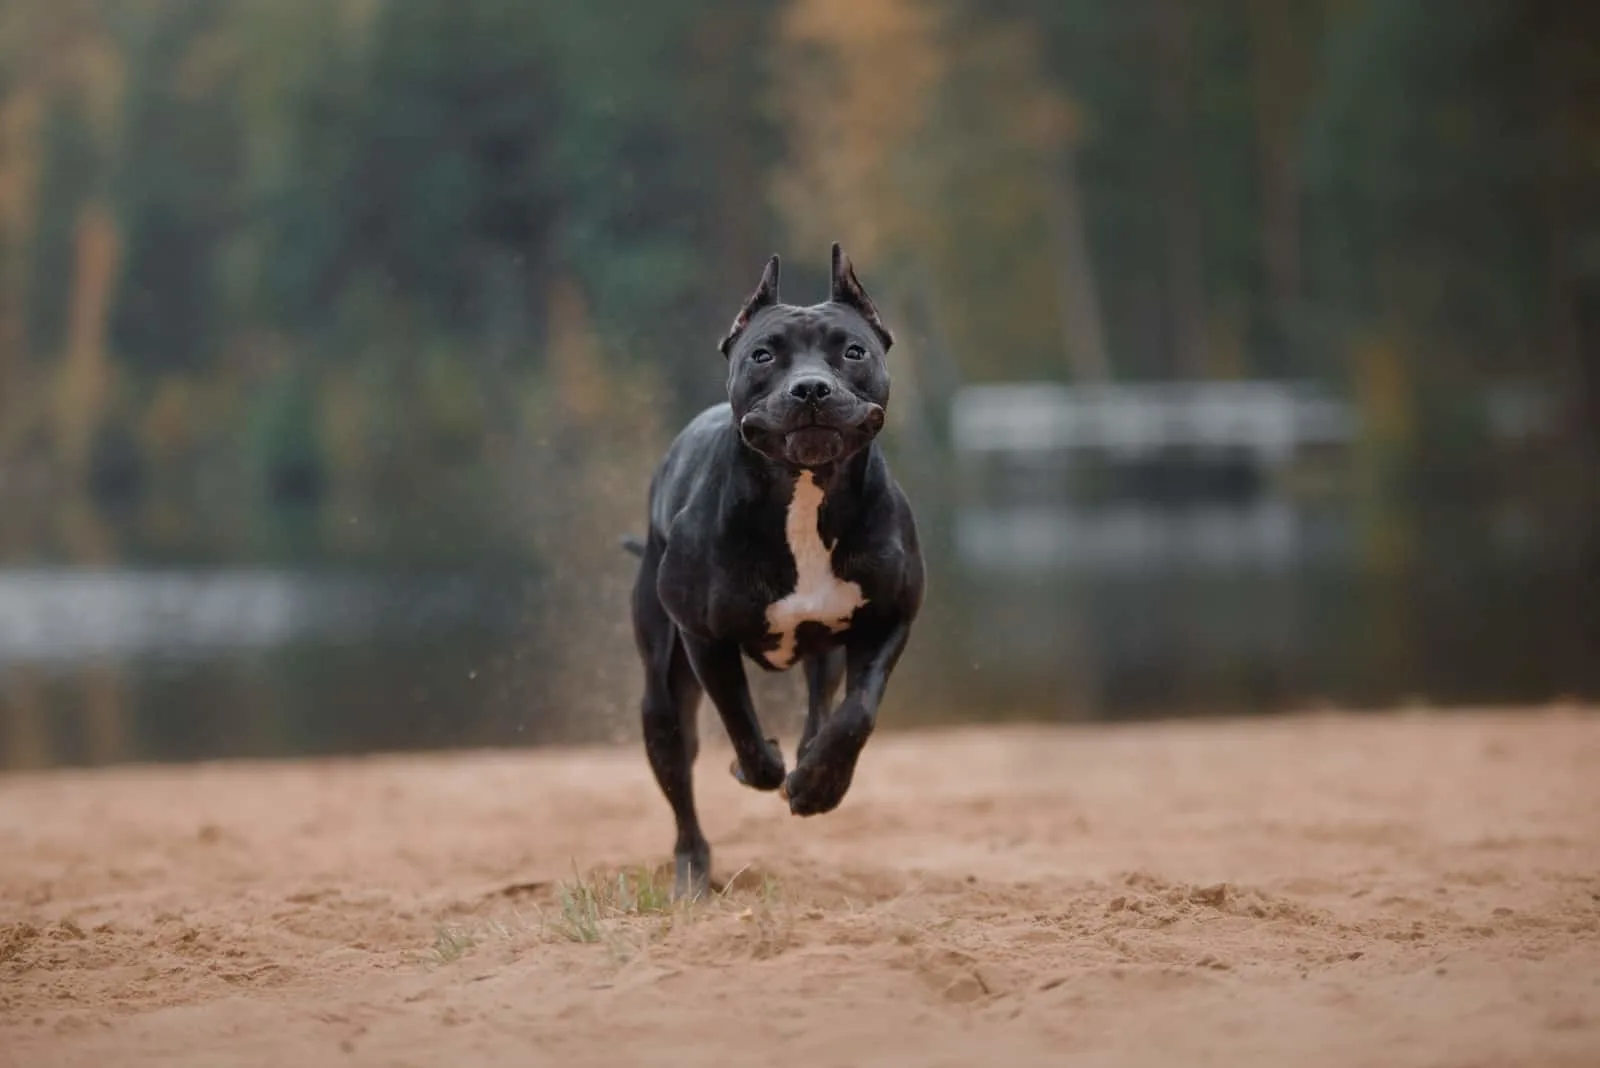 American Pitbull Terrier runs across the field